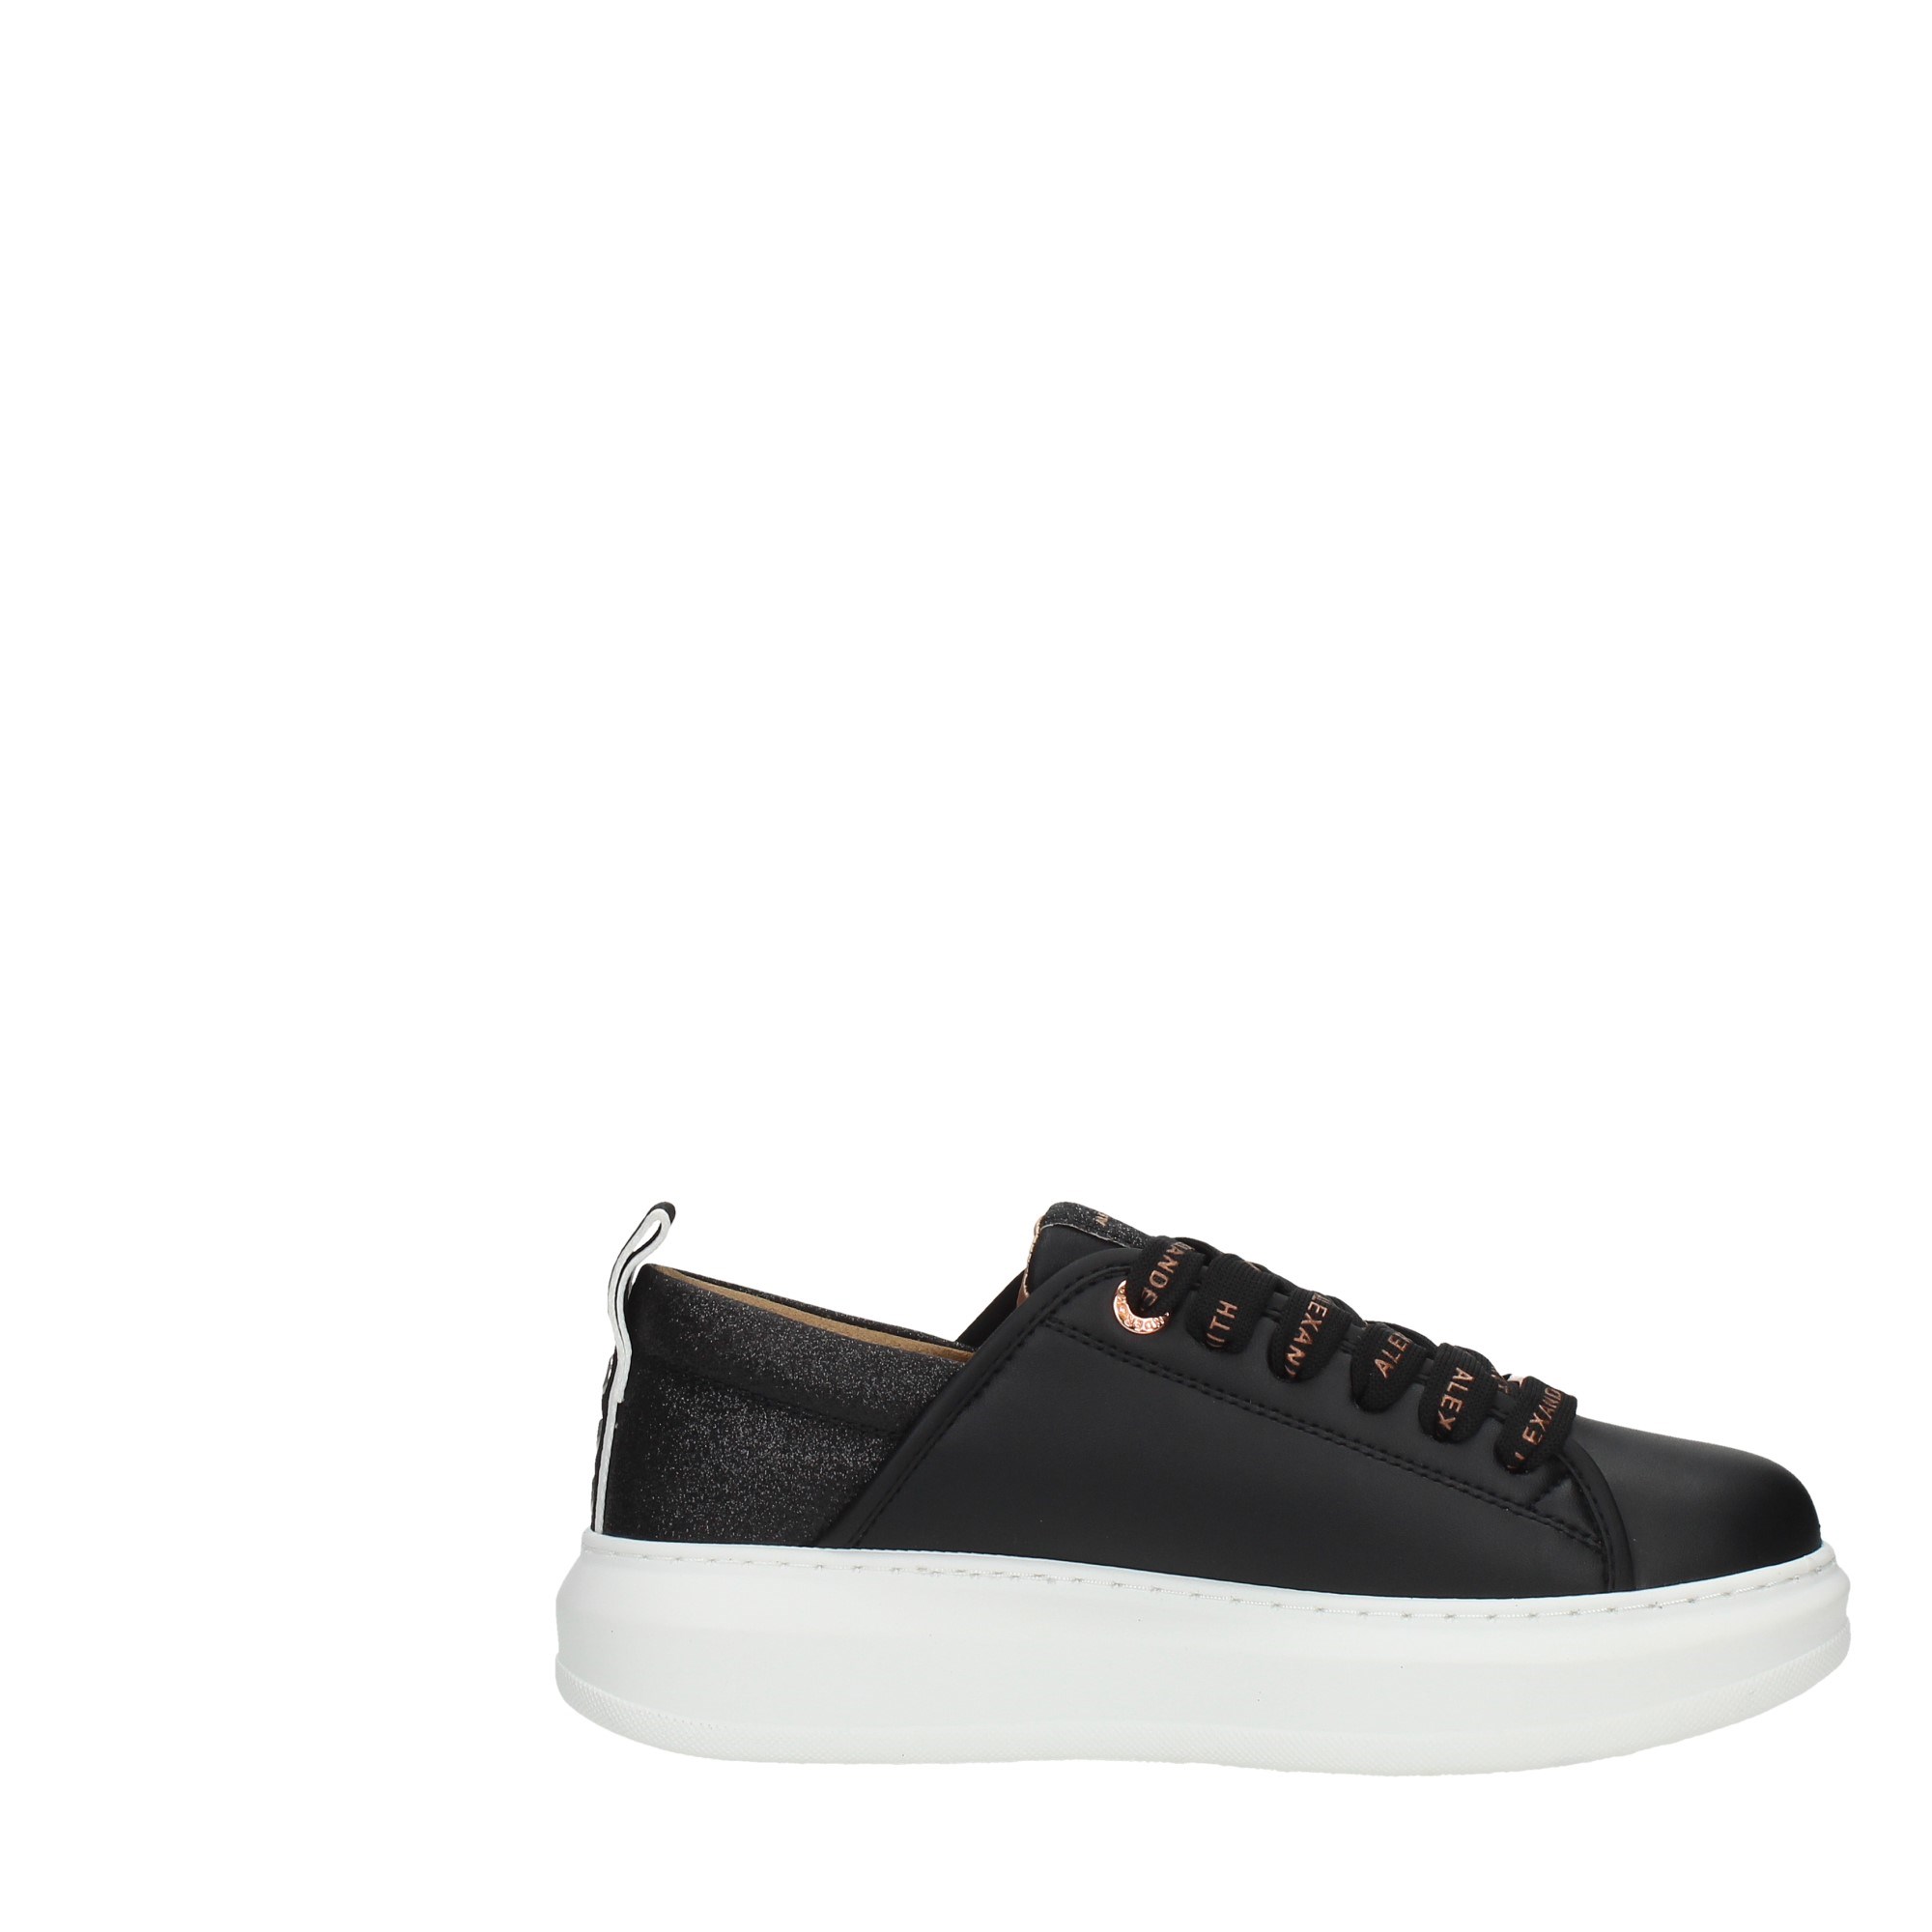 Alexander Smith Shoes Women Sneakers ECD14BLK/BLACK